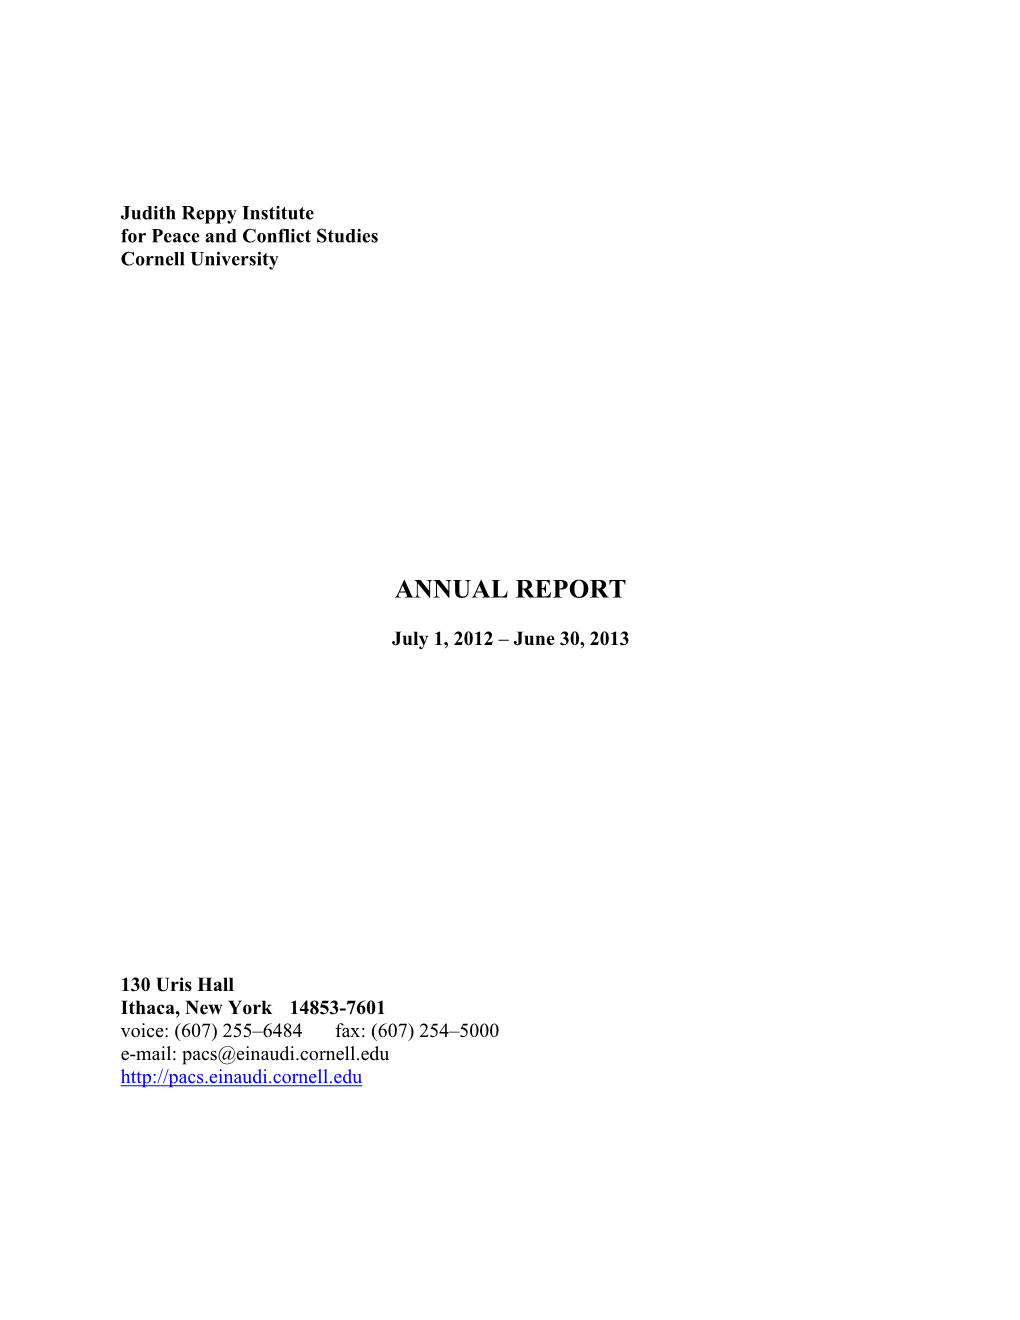 2012-13 Annual Report.Pdf (400.9Kb)